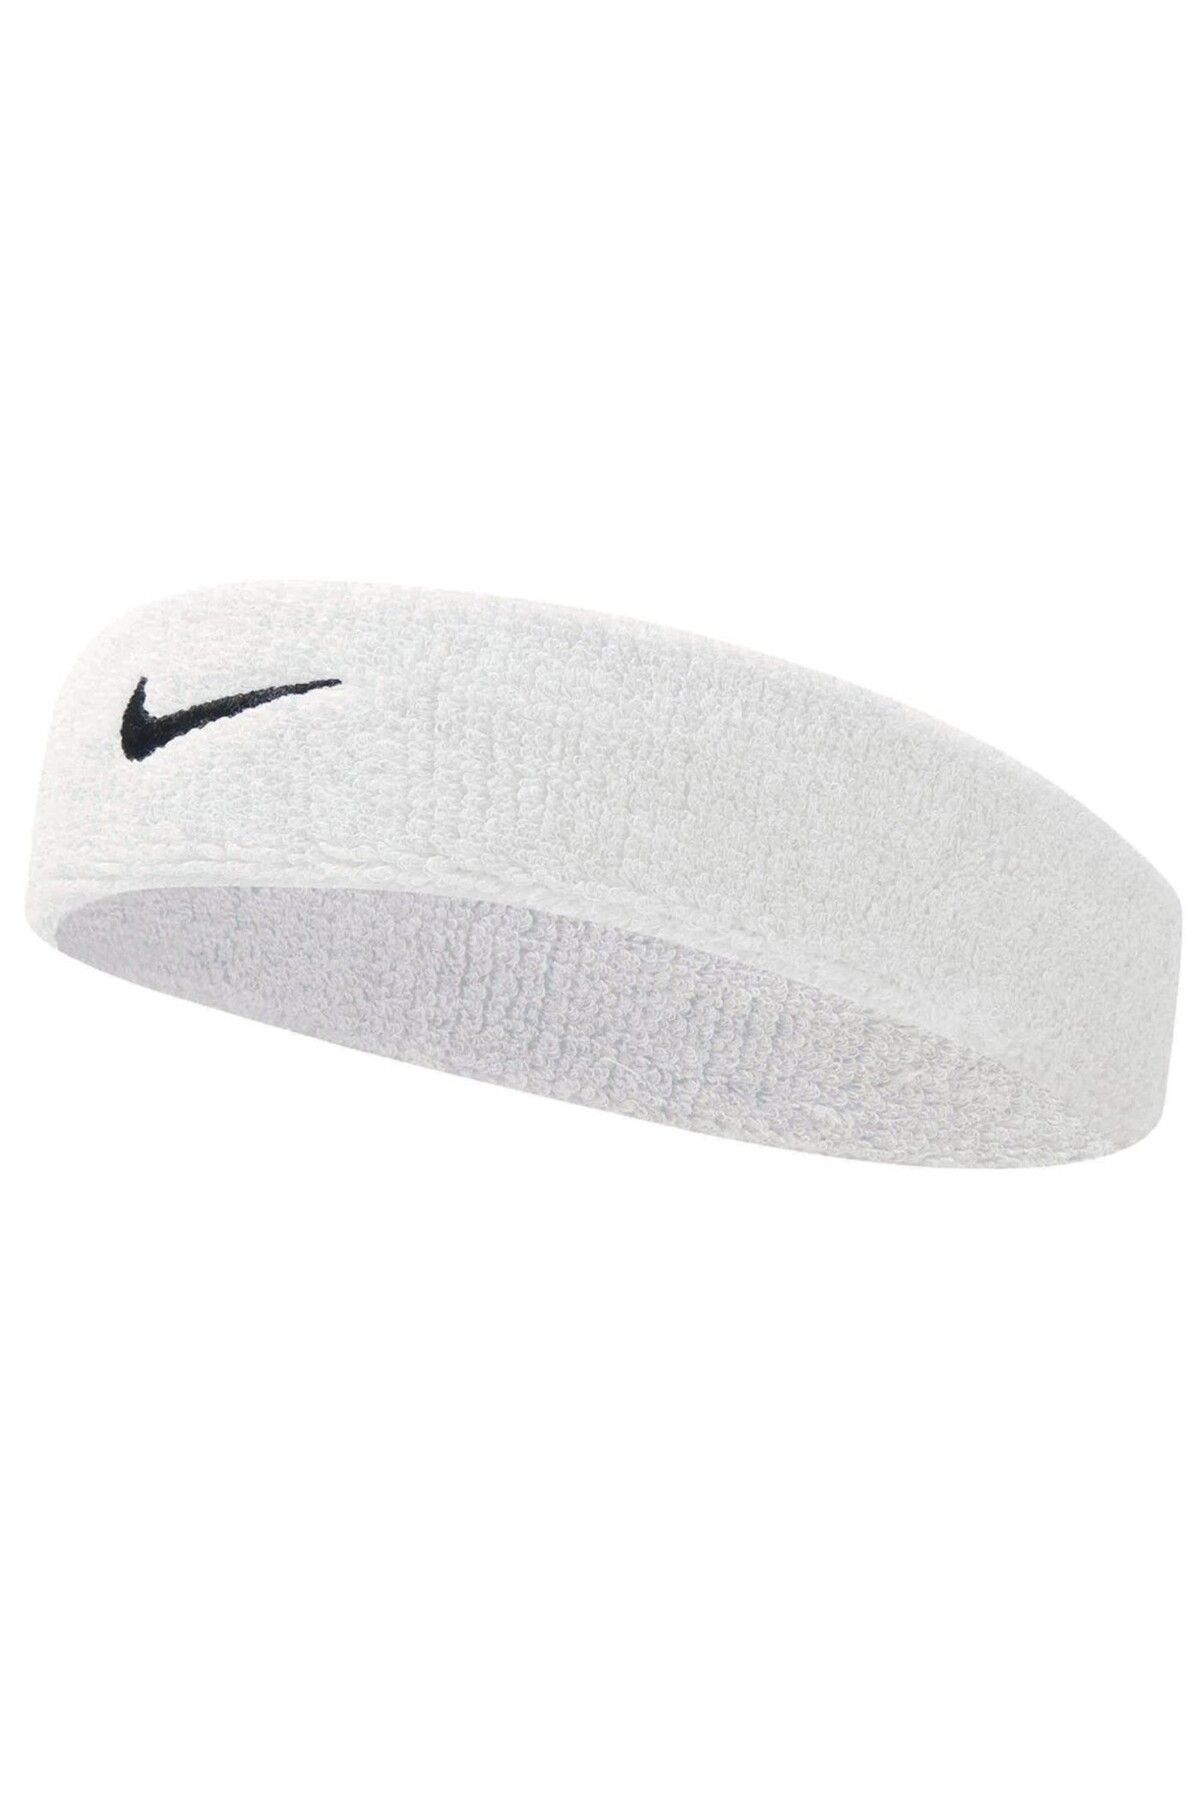 Nike Swoosh Headband White/black Osfm, One Size/5